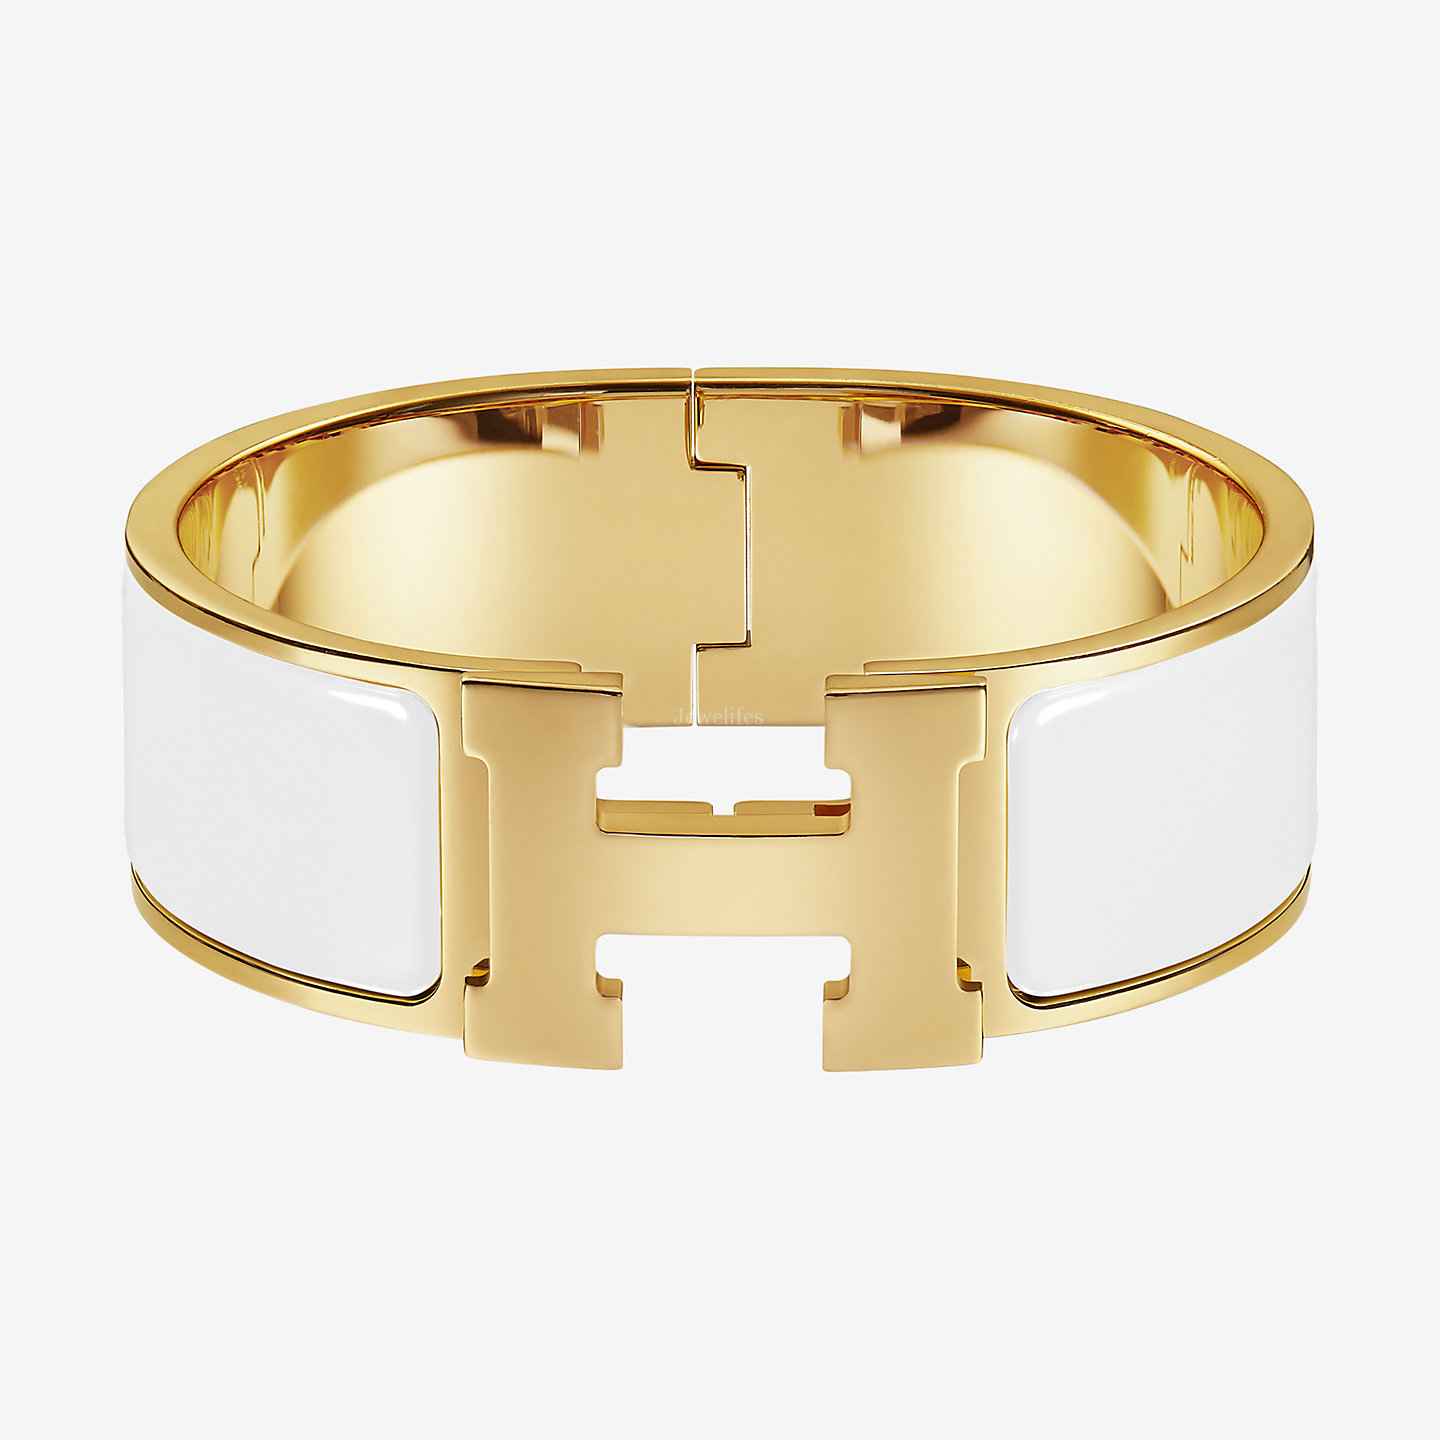 Used Replica Hermes Bracelet Epsom Collier De Chien CDC Cuff HERMÈS Black   Gold Womens Fashion Jewelry  Organisers Bracelets on Carousell